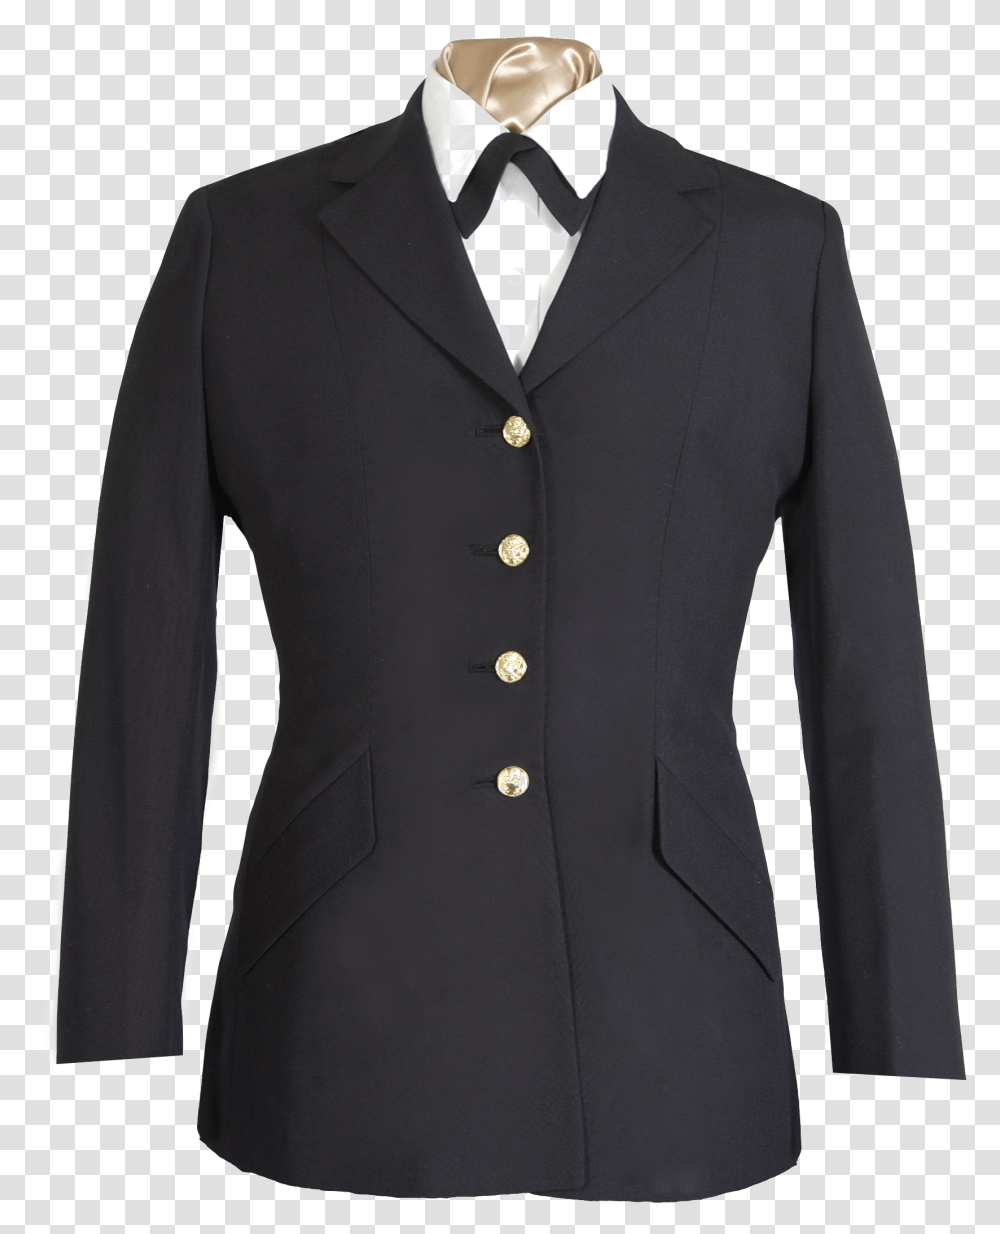 Ladies Jacket Free Download Female Asus Nco, Apparel, Suit, Overcoat Transparent Png